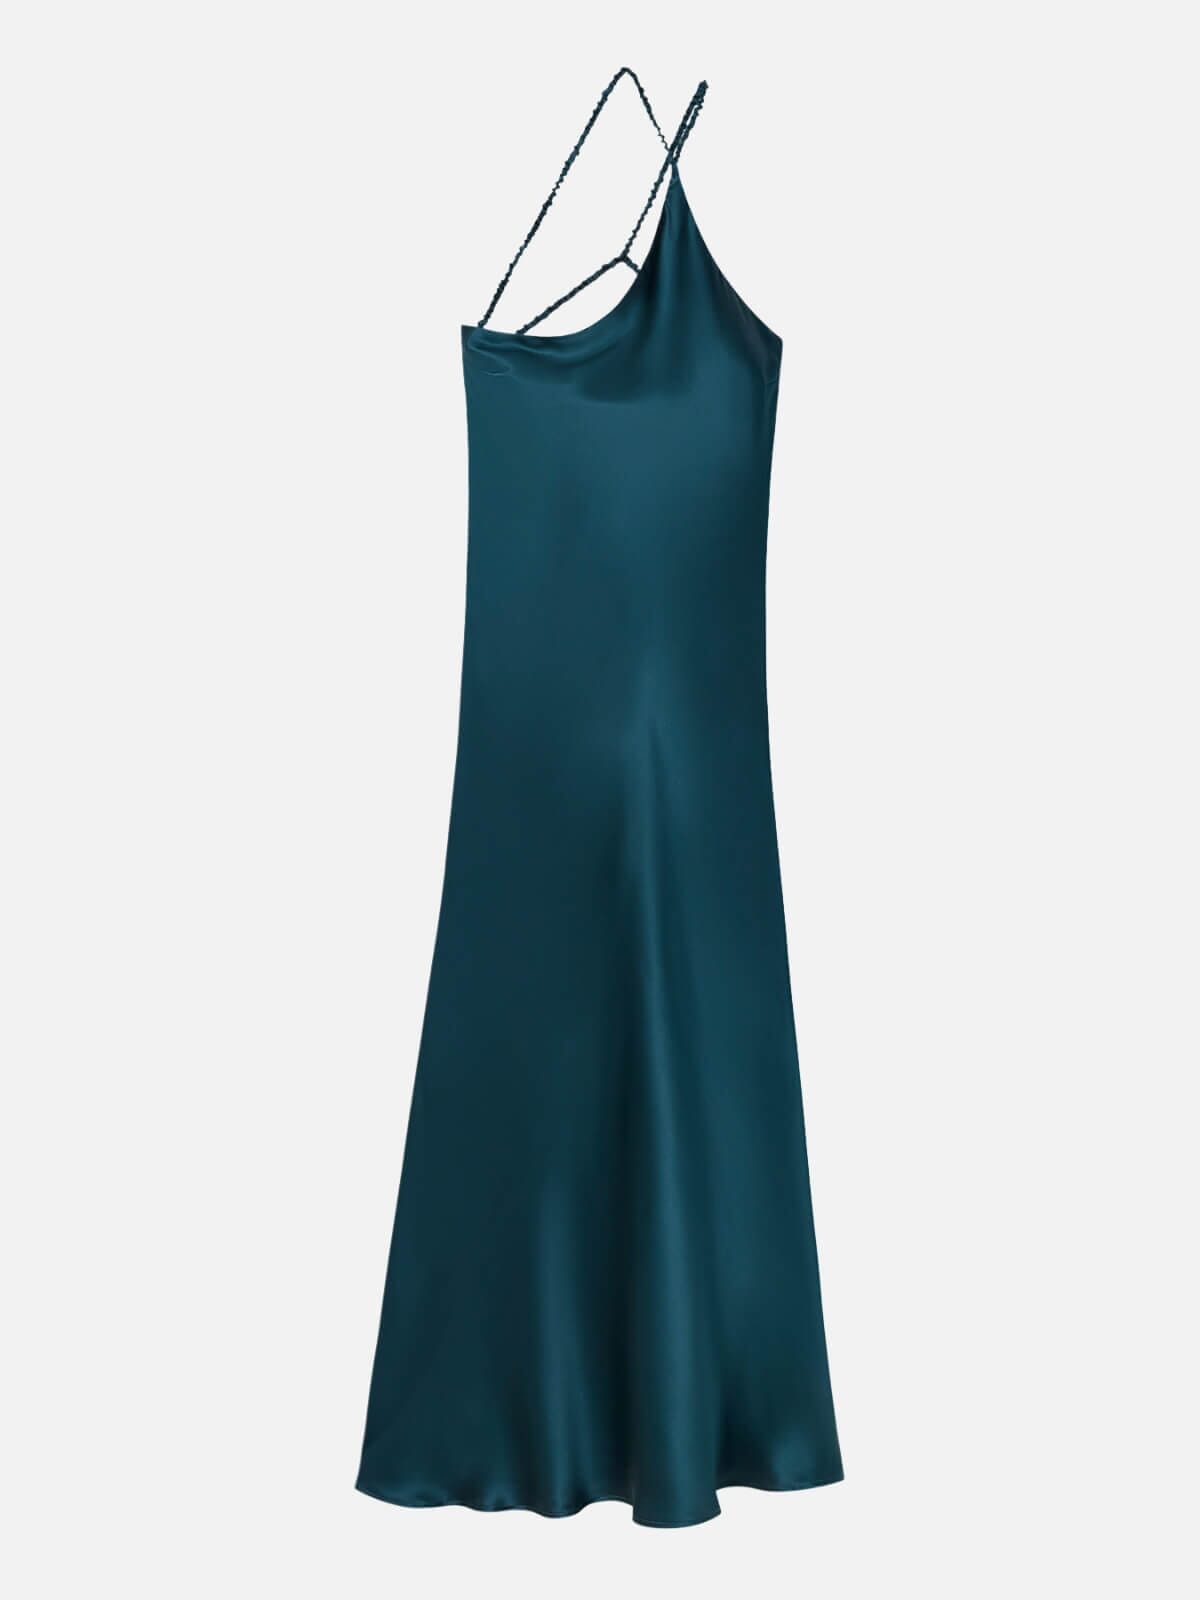 Silk Laundry | Slope Dress - Teal | PerluSilk Laundry | Slope Dress - Teal | Perlu